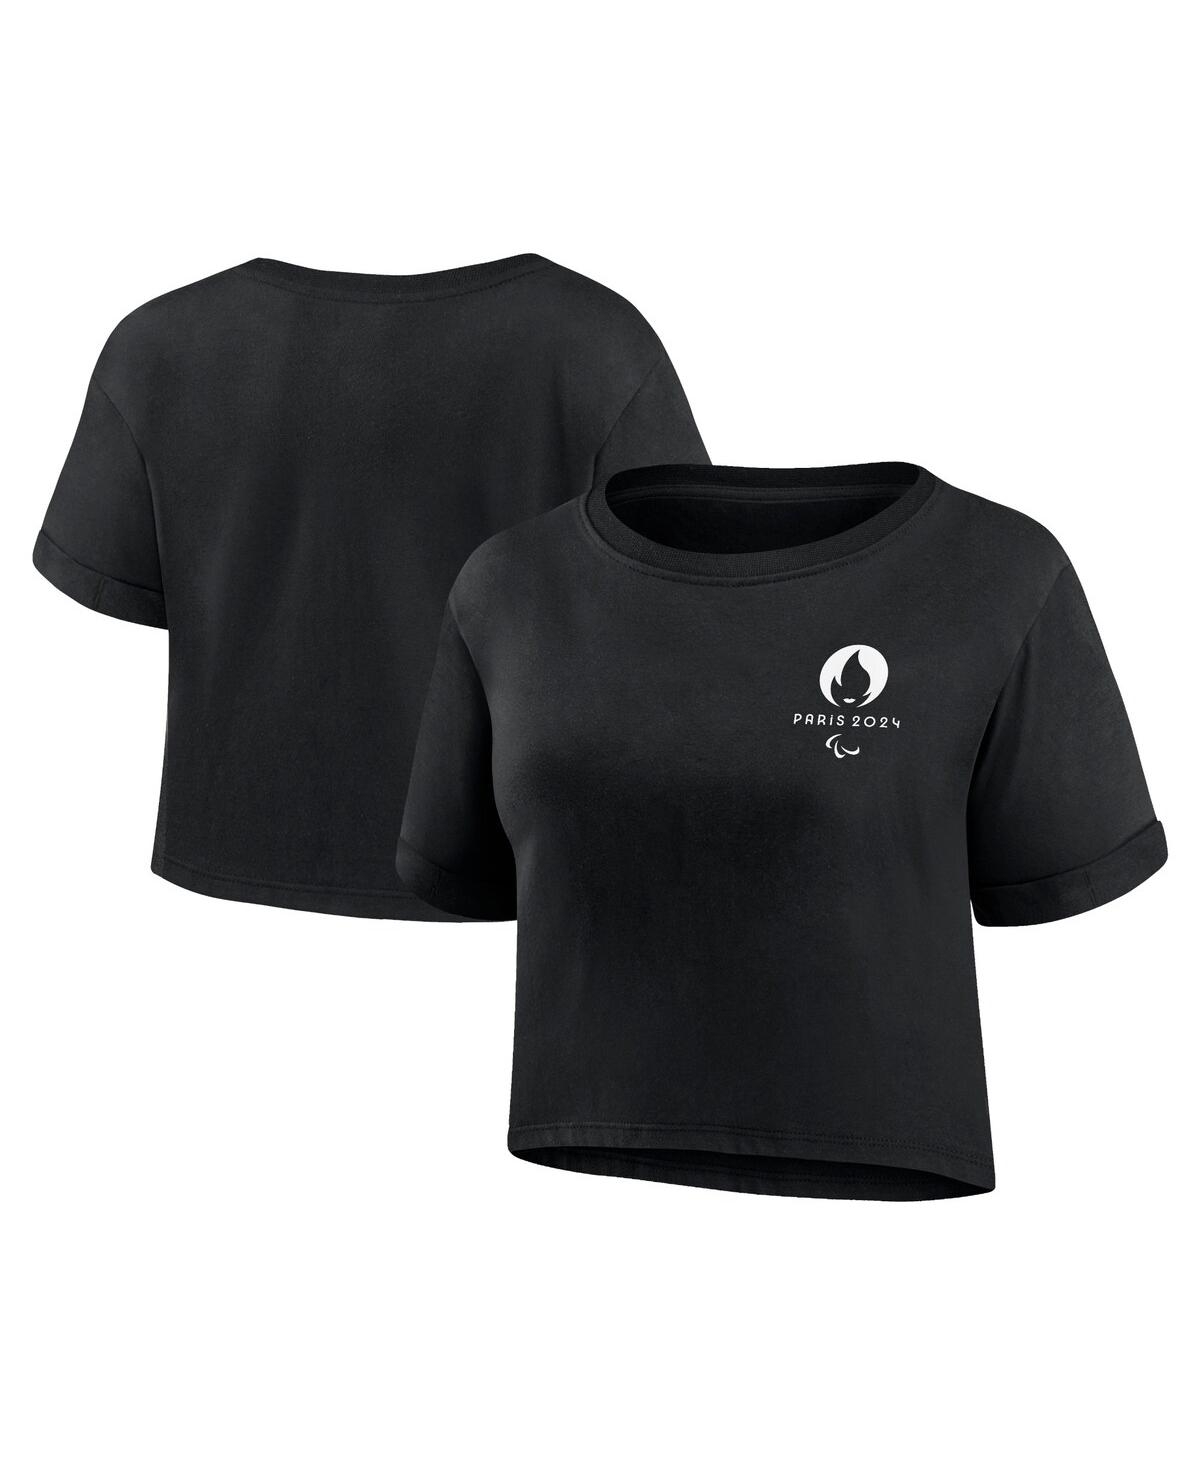 Branded Women's Black Paris 2024 Summer Static Fashion Cropped T-Shirt - Black